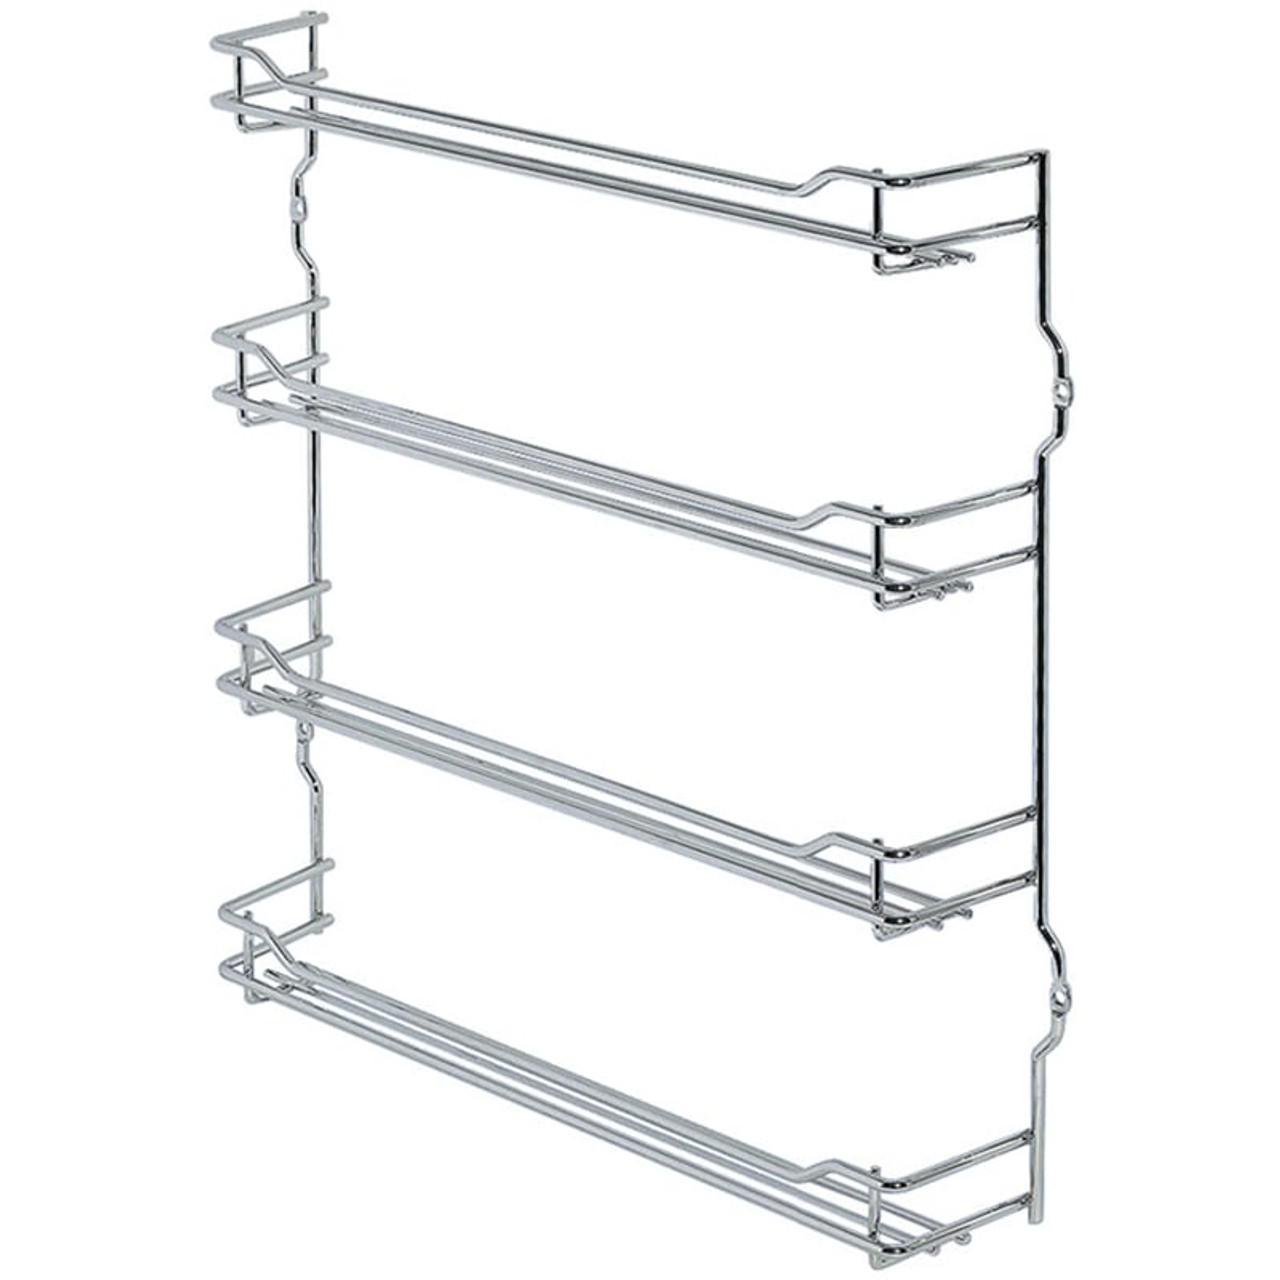 Hafele Non-Slip Shelf Liner Mats for Kitchen or Vanity Cabinets or Shelves